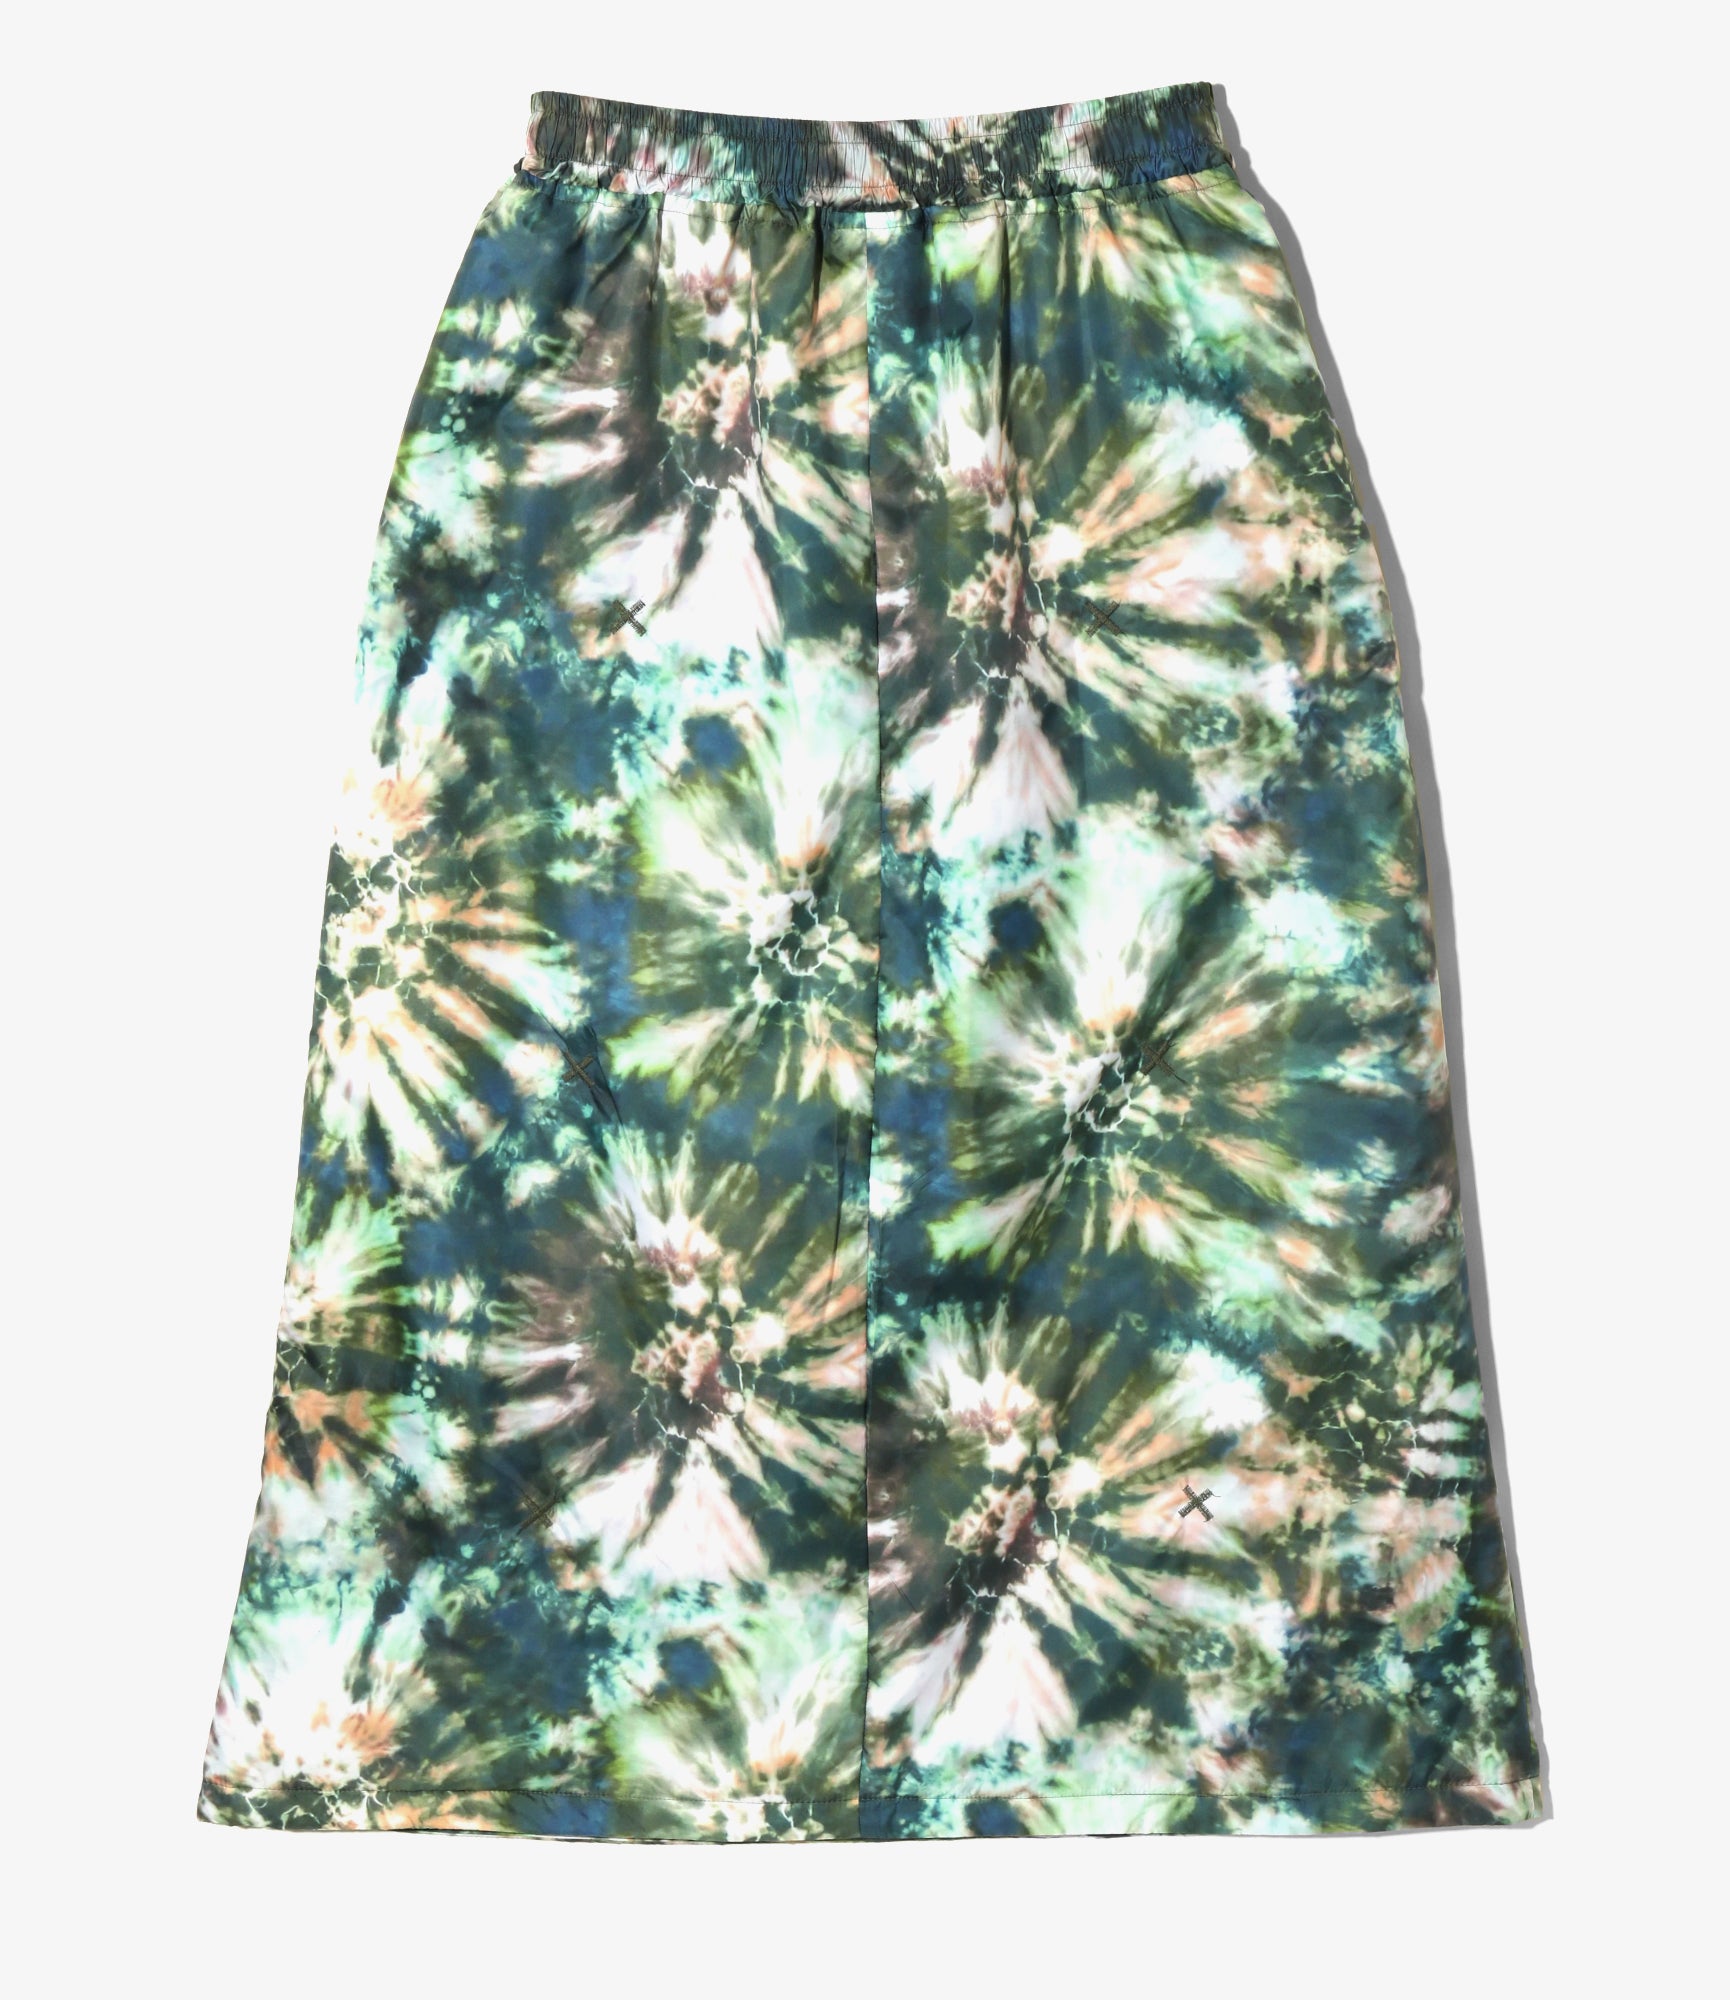 Filling String Skirt - Green - Poly Taffeta / Tie Dye Printed